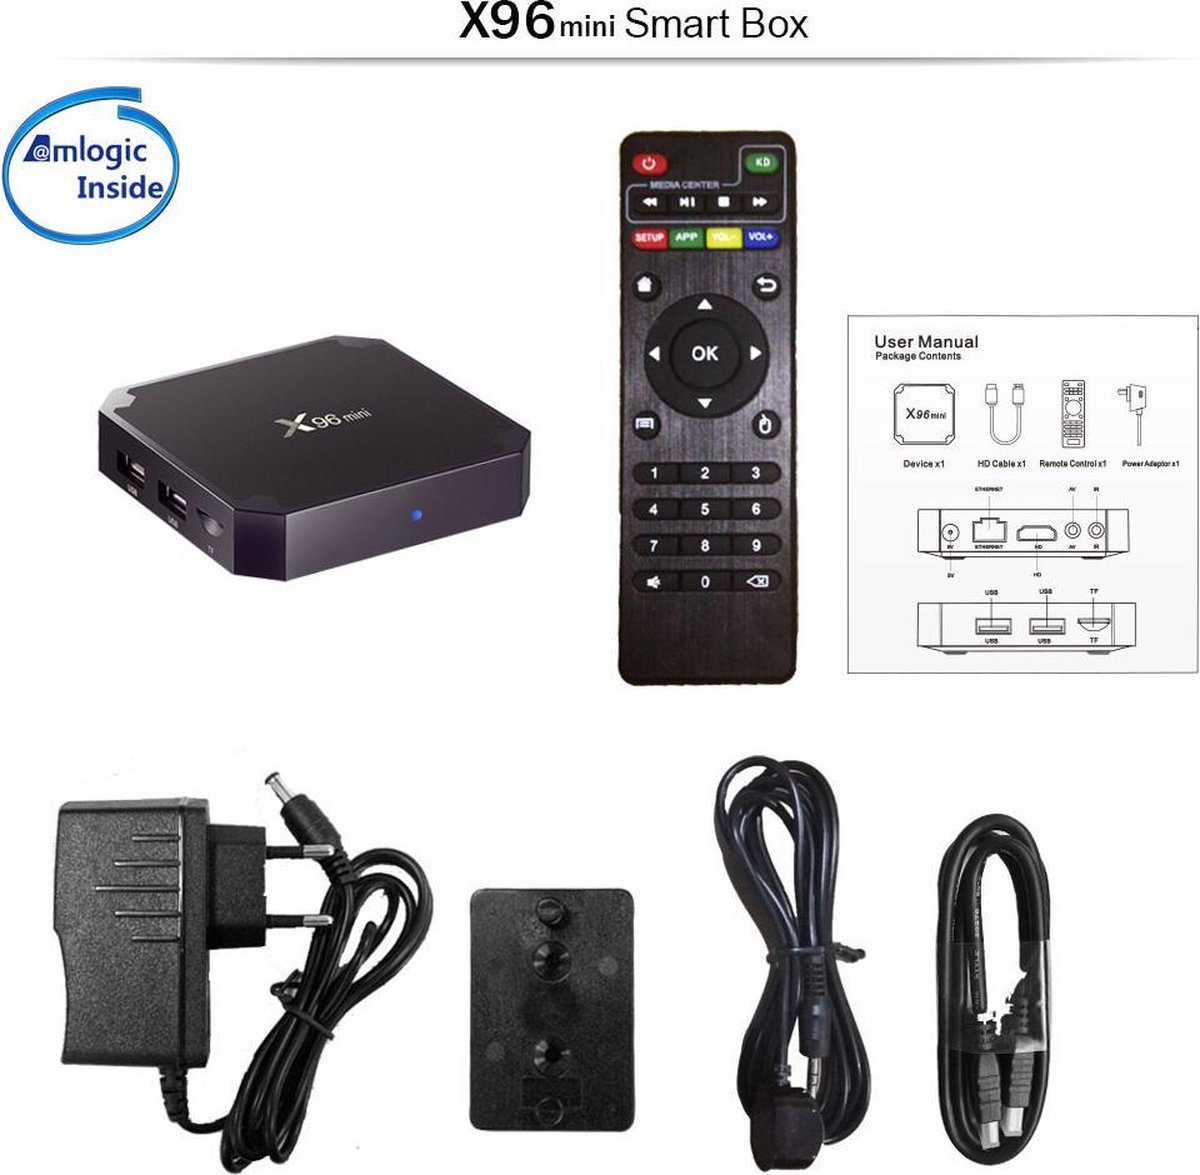 caja de TV 4K con Amlogic S905W Quad-Core chipset 64 bits 2GB/16GB,WiFi Mini reproductor multimedia de transmisión continua Android 9.0 4K HD,H.265 by puersit X96 